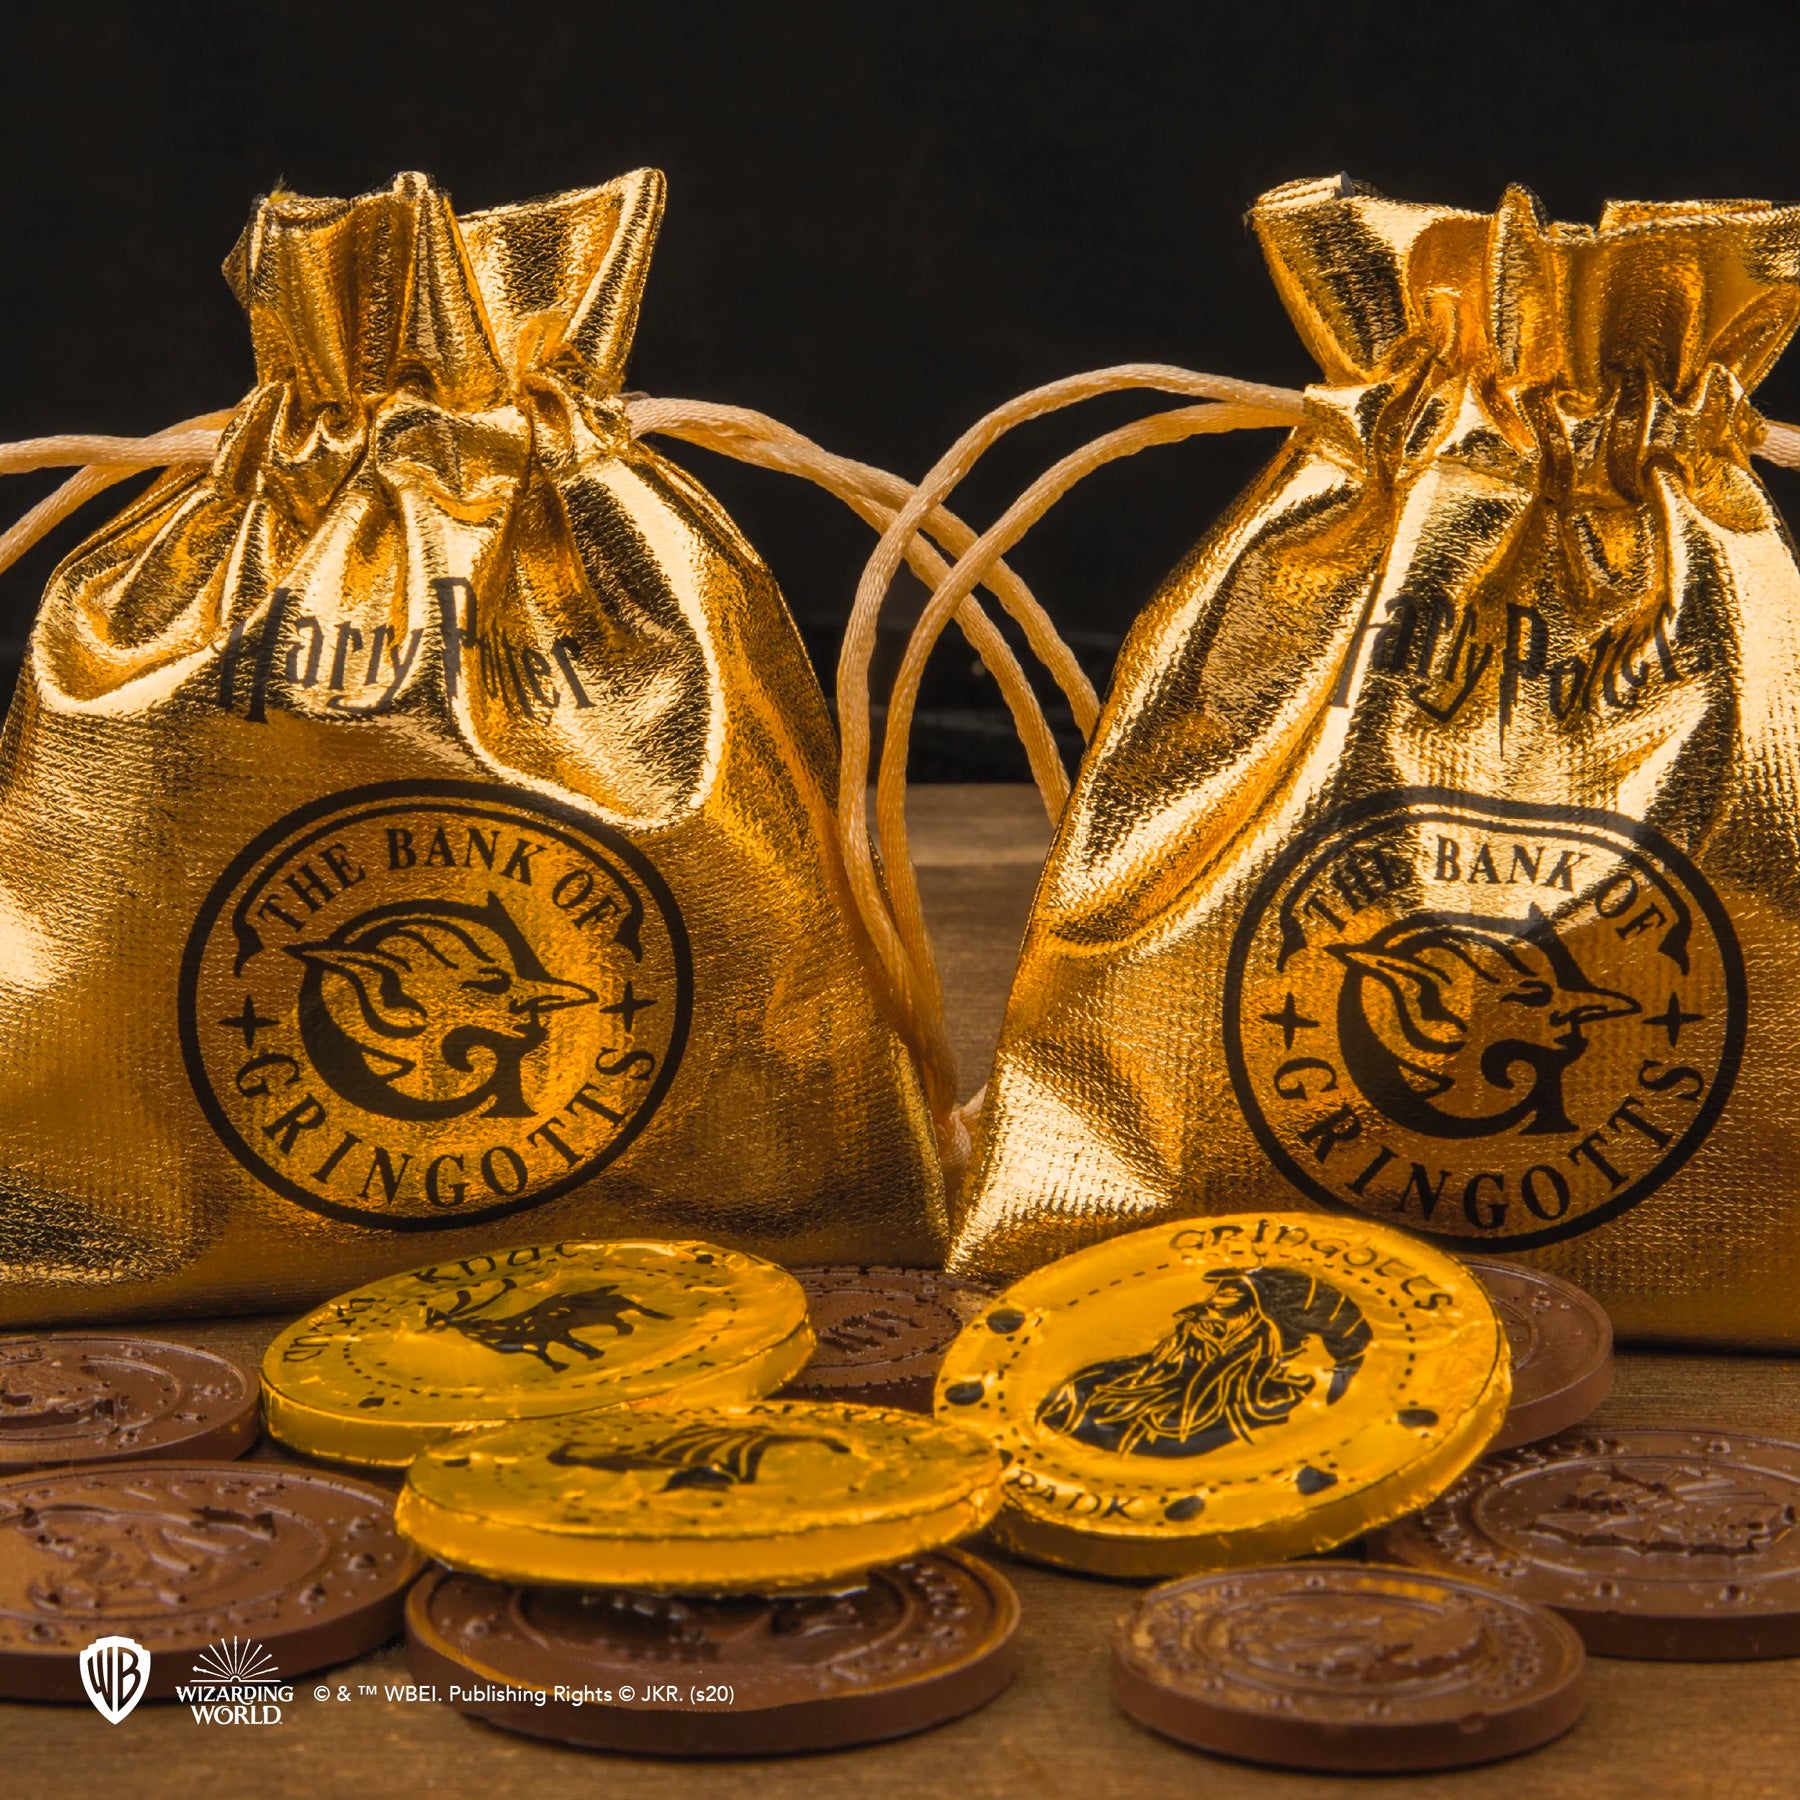 Gringotts Bank Chocolate Coin Mold Kit